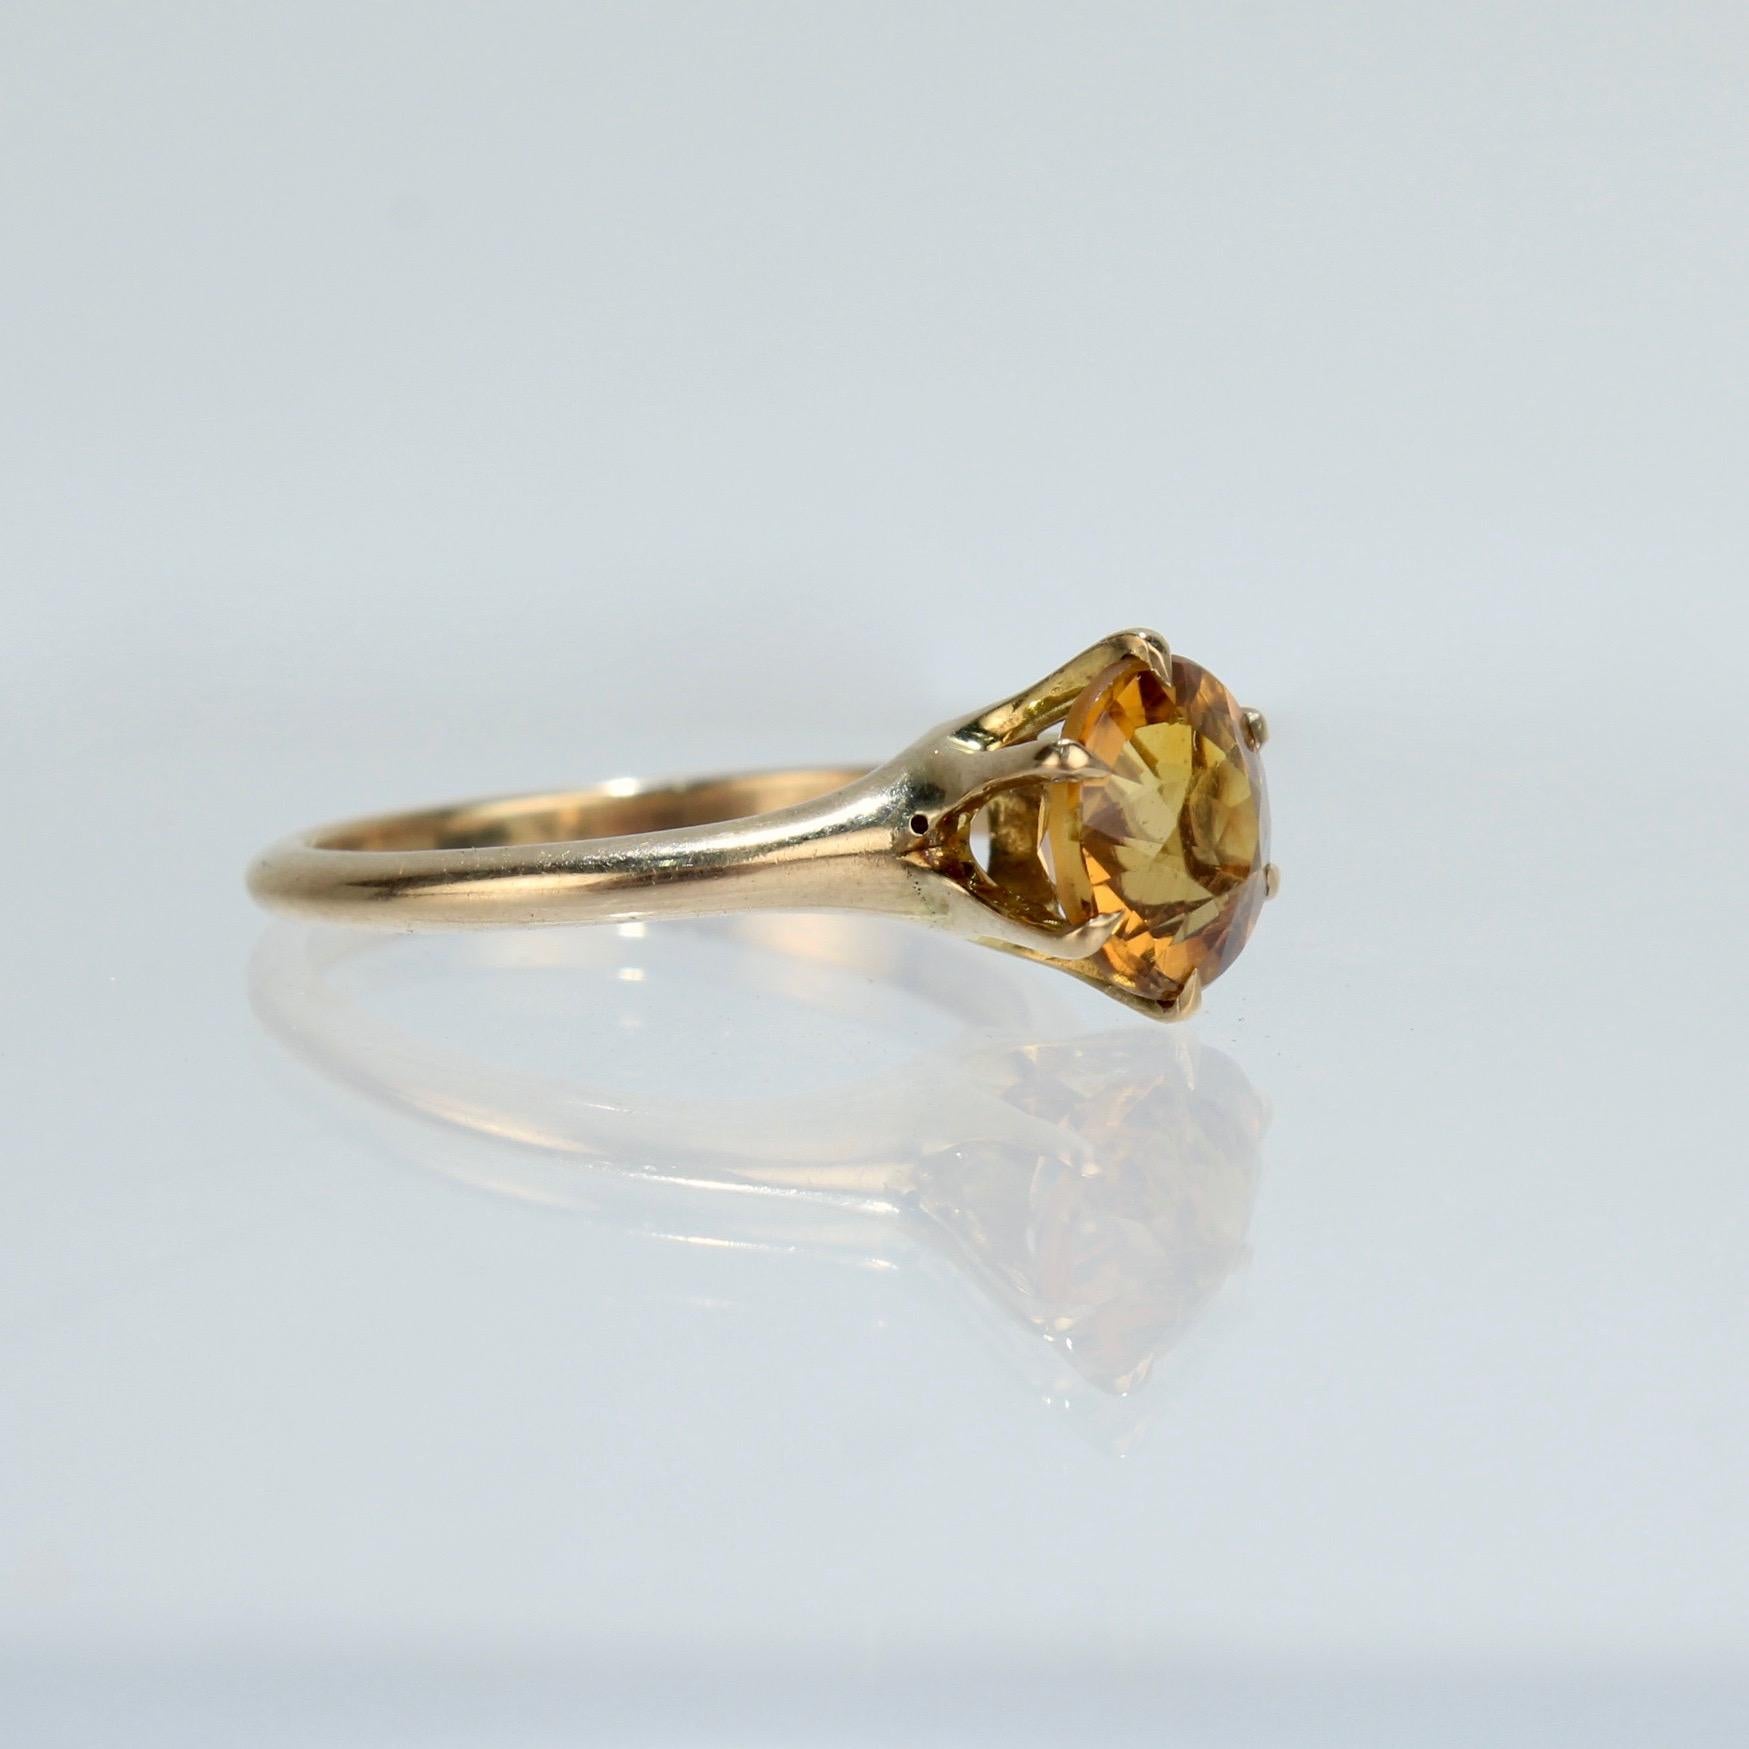 Edwardian Vintage Gold and Orange Citrine Solitaire Ring